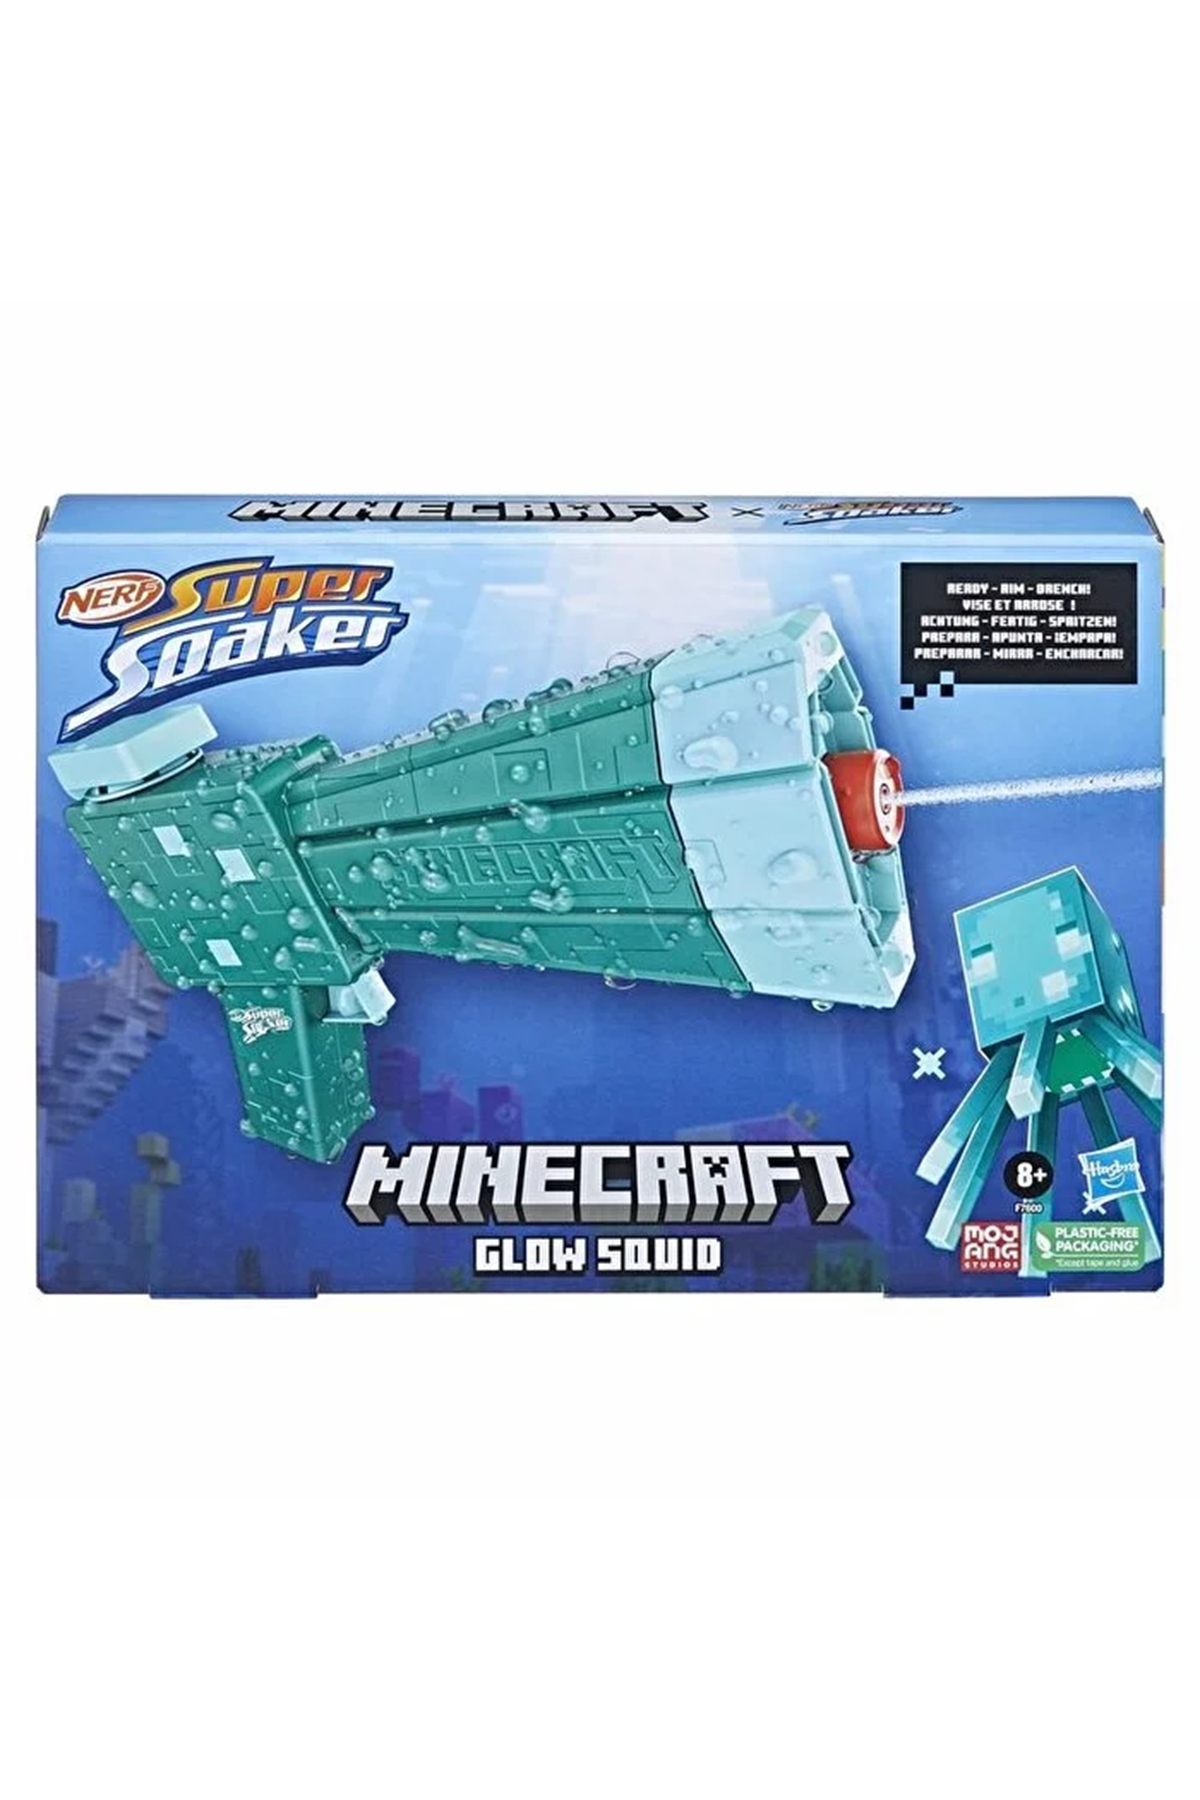 Nerf Super Soaker Minecraft Glow Squid F7600